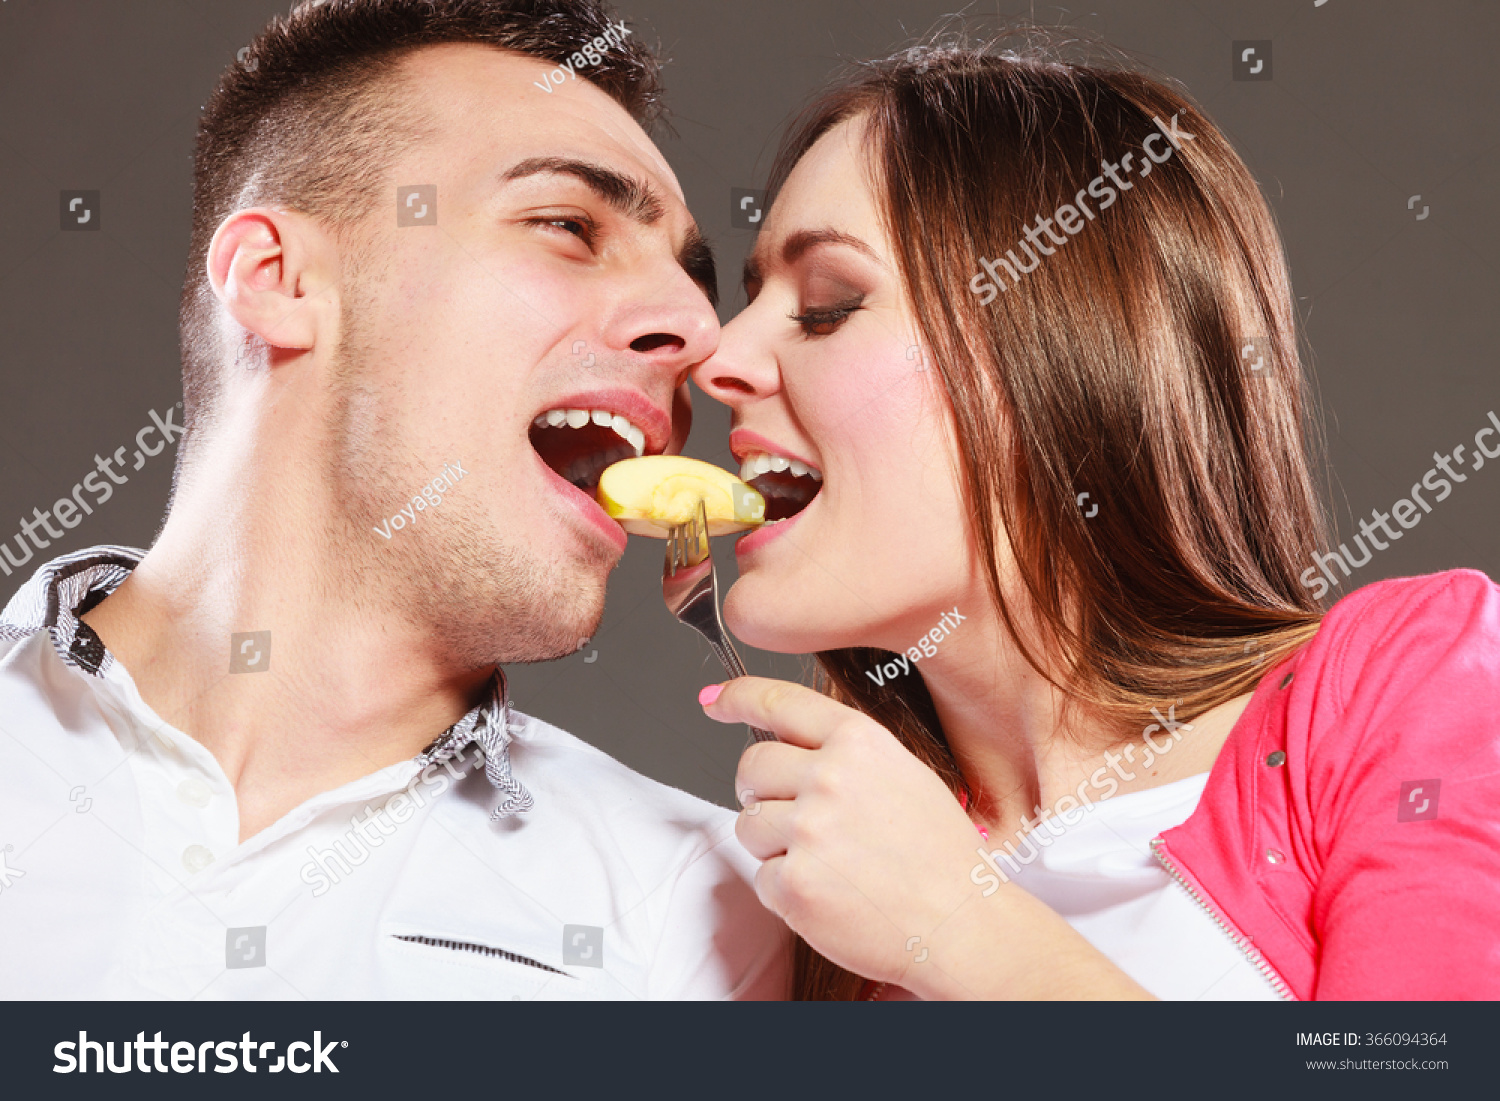 Парень и девушка едят вместе